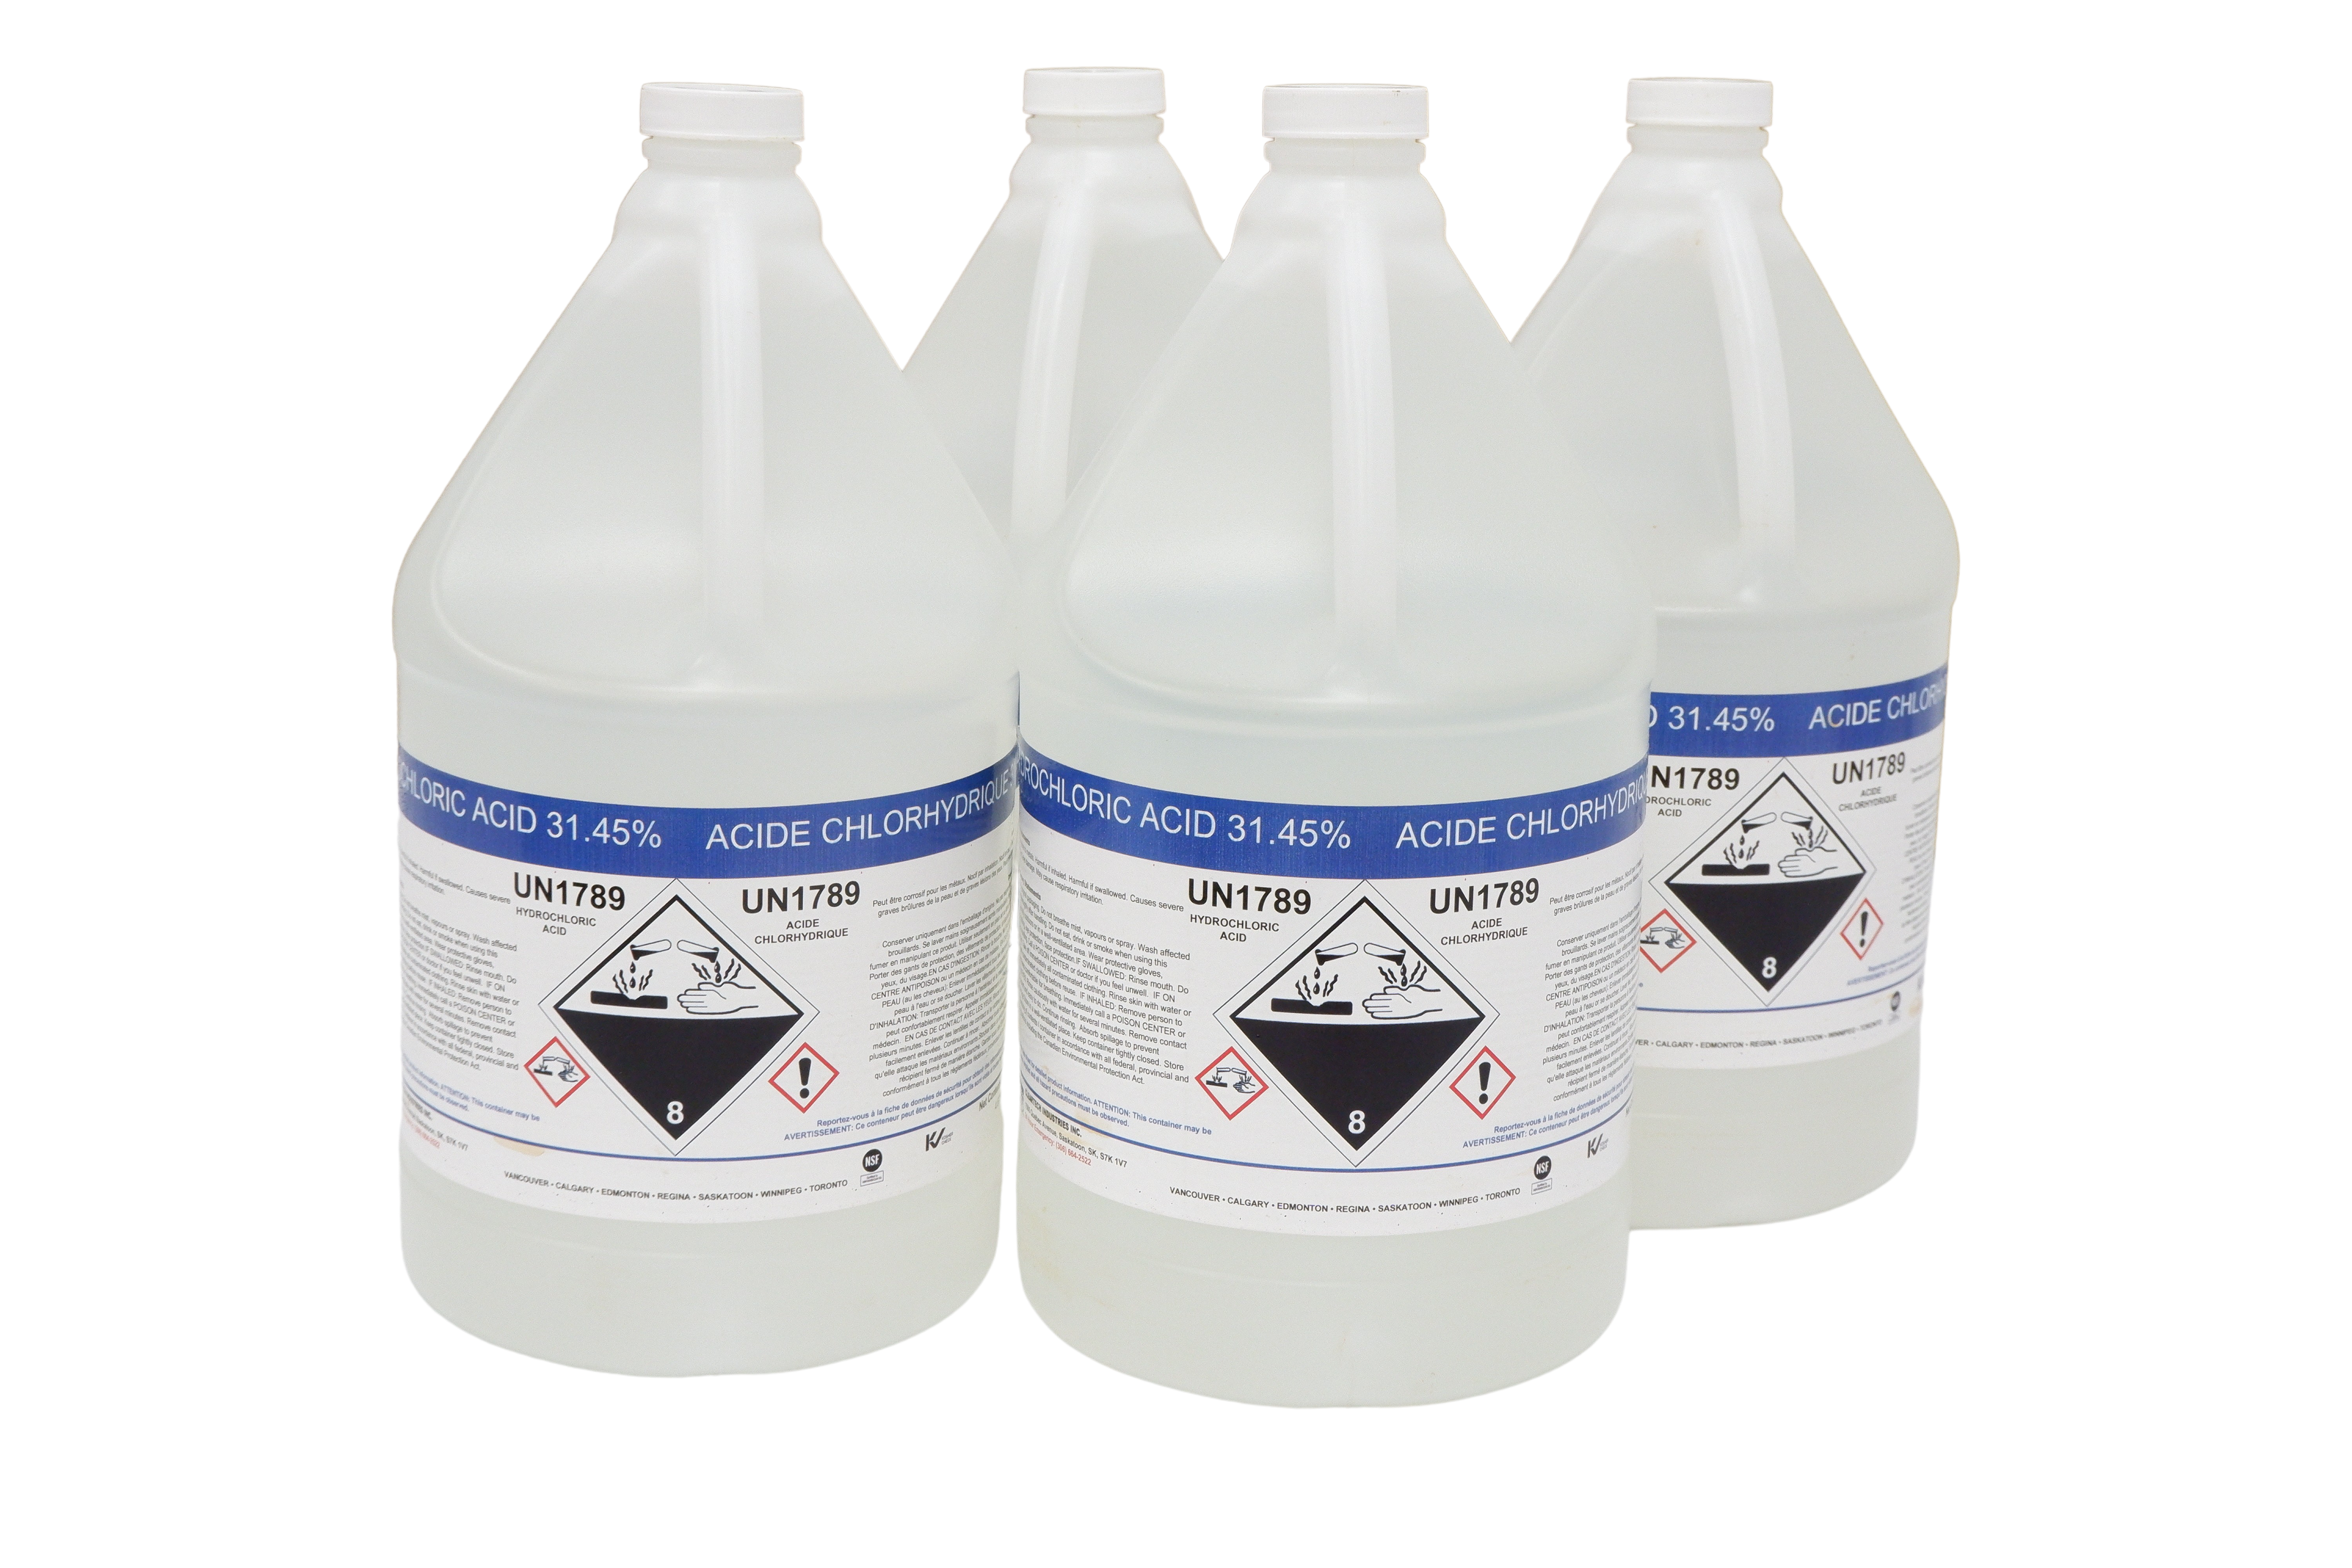 Hydrochloric Acid (Muriatic Acid) - 31.45% - NSF Certified - Case of 4X4L Jugs